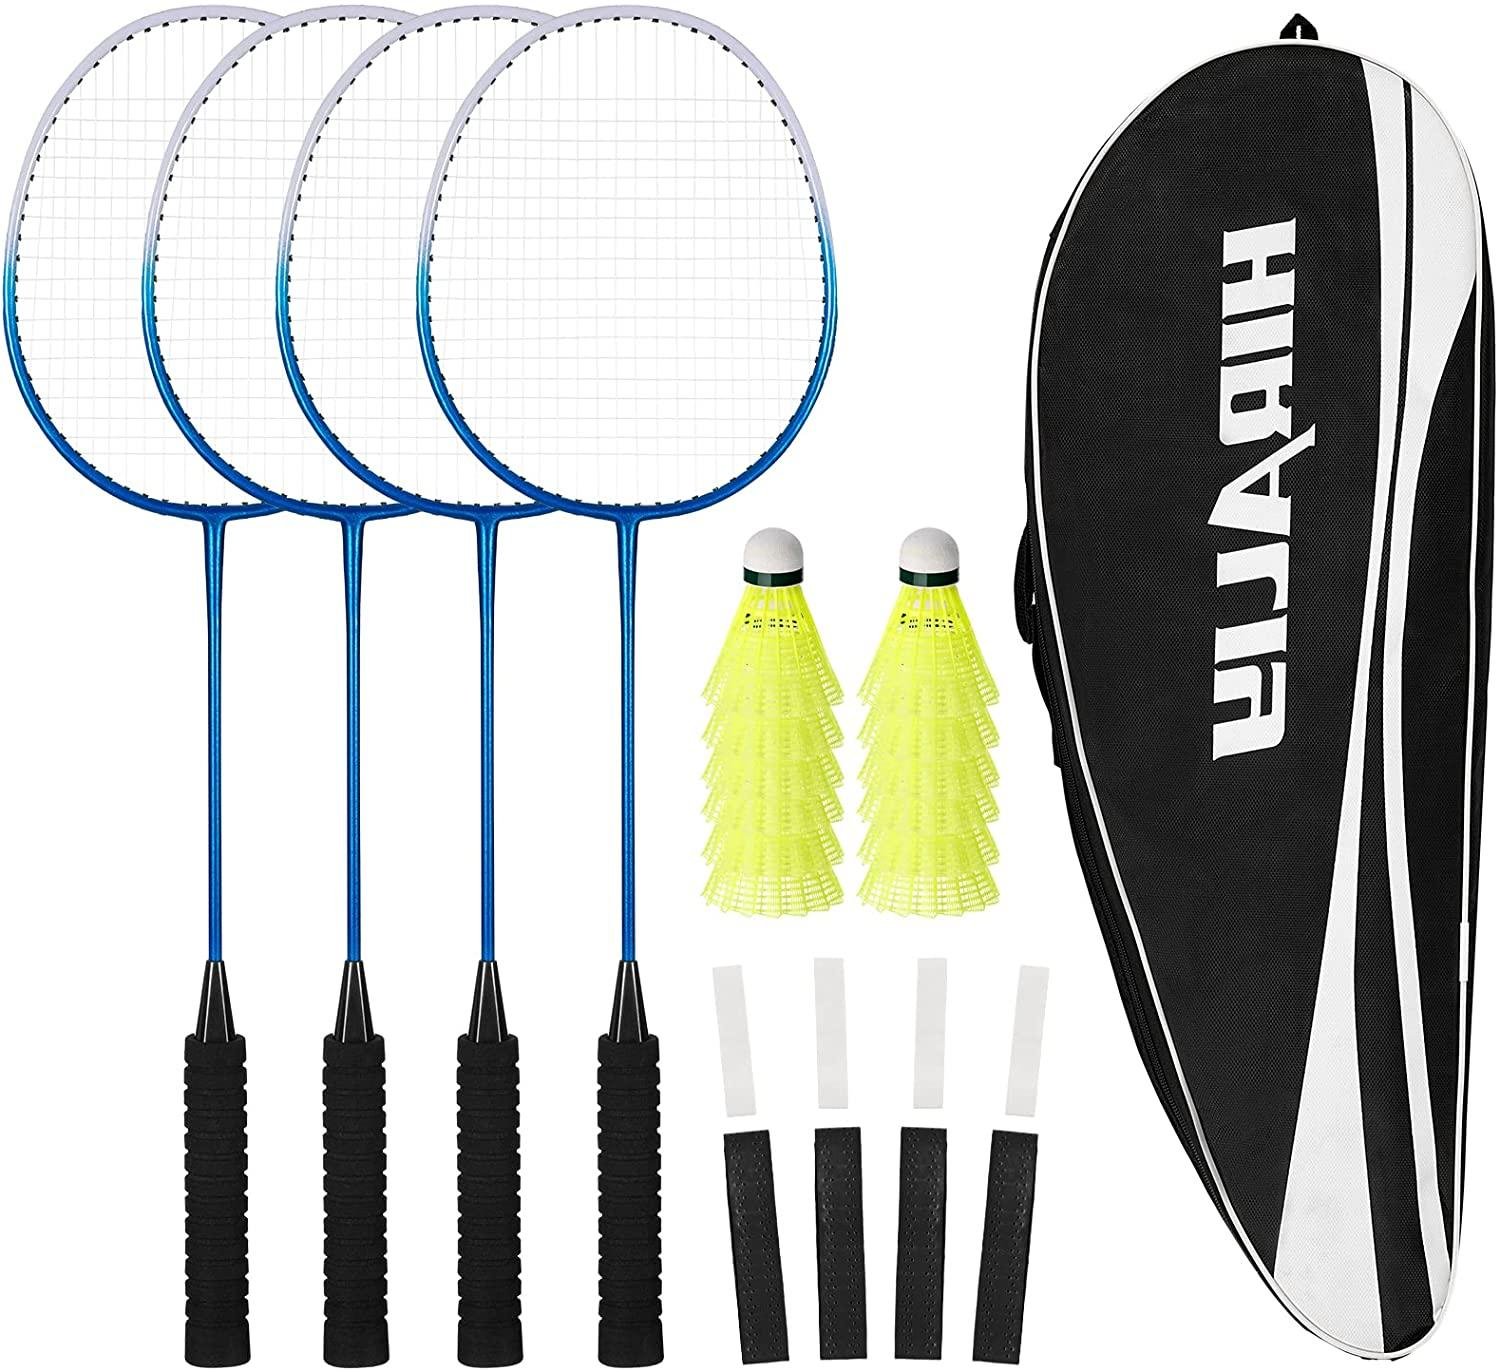 HIRALIY Badminton Rackets Set of 4 for Outdoor Backyard Games, Including 4 Racke